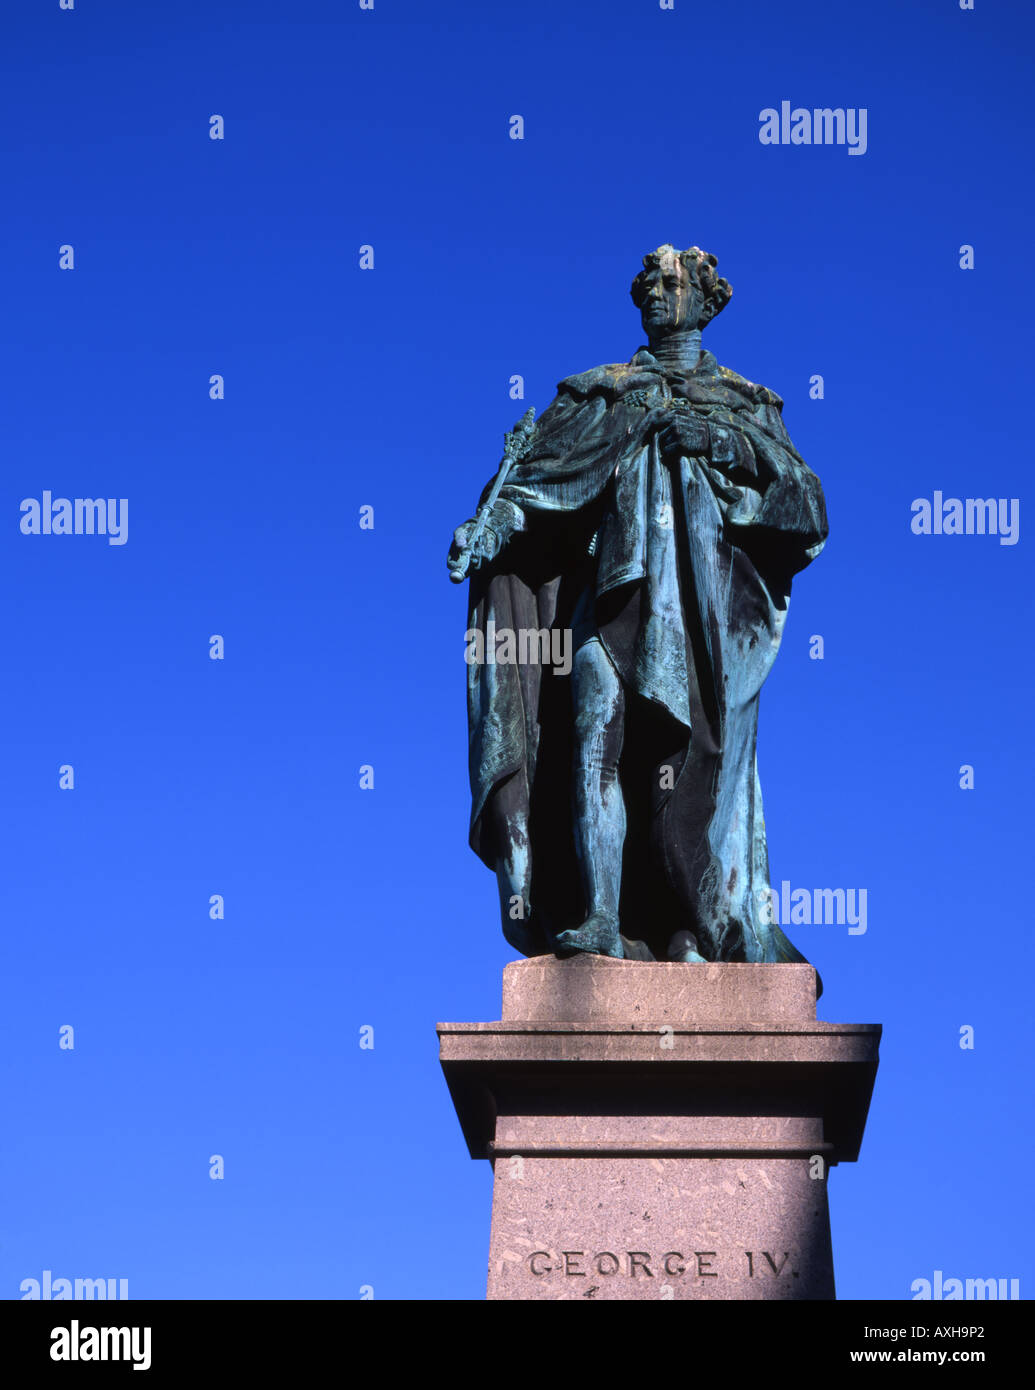 Estatua del rey George IV en Edimburgo, Escocia Foto de stock